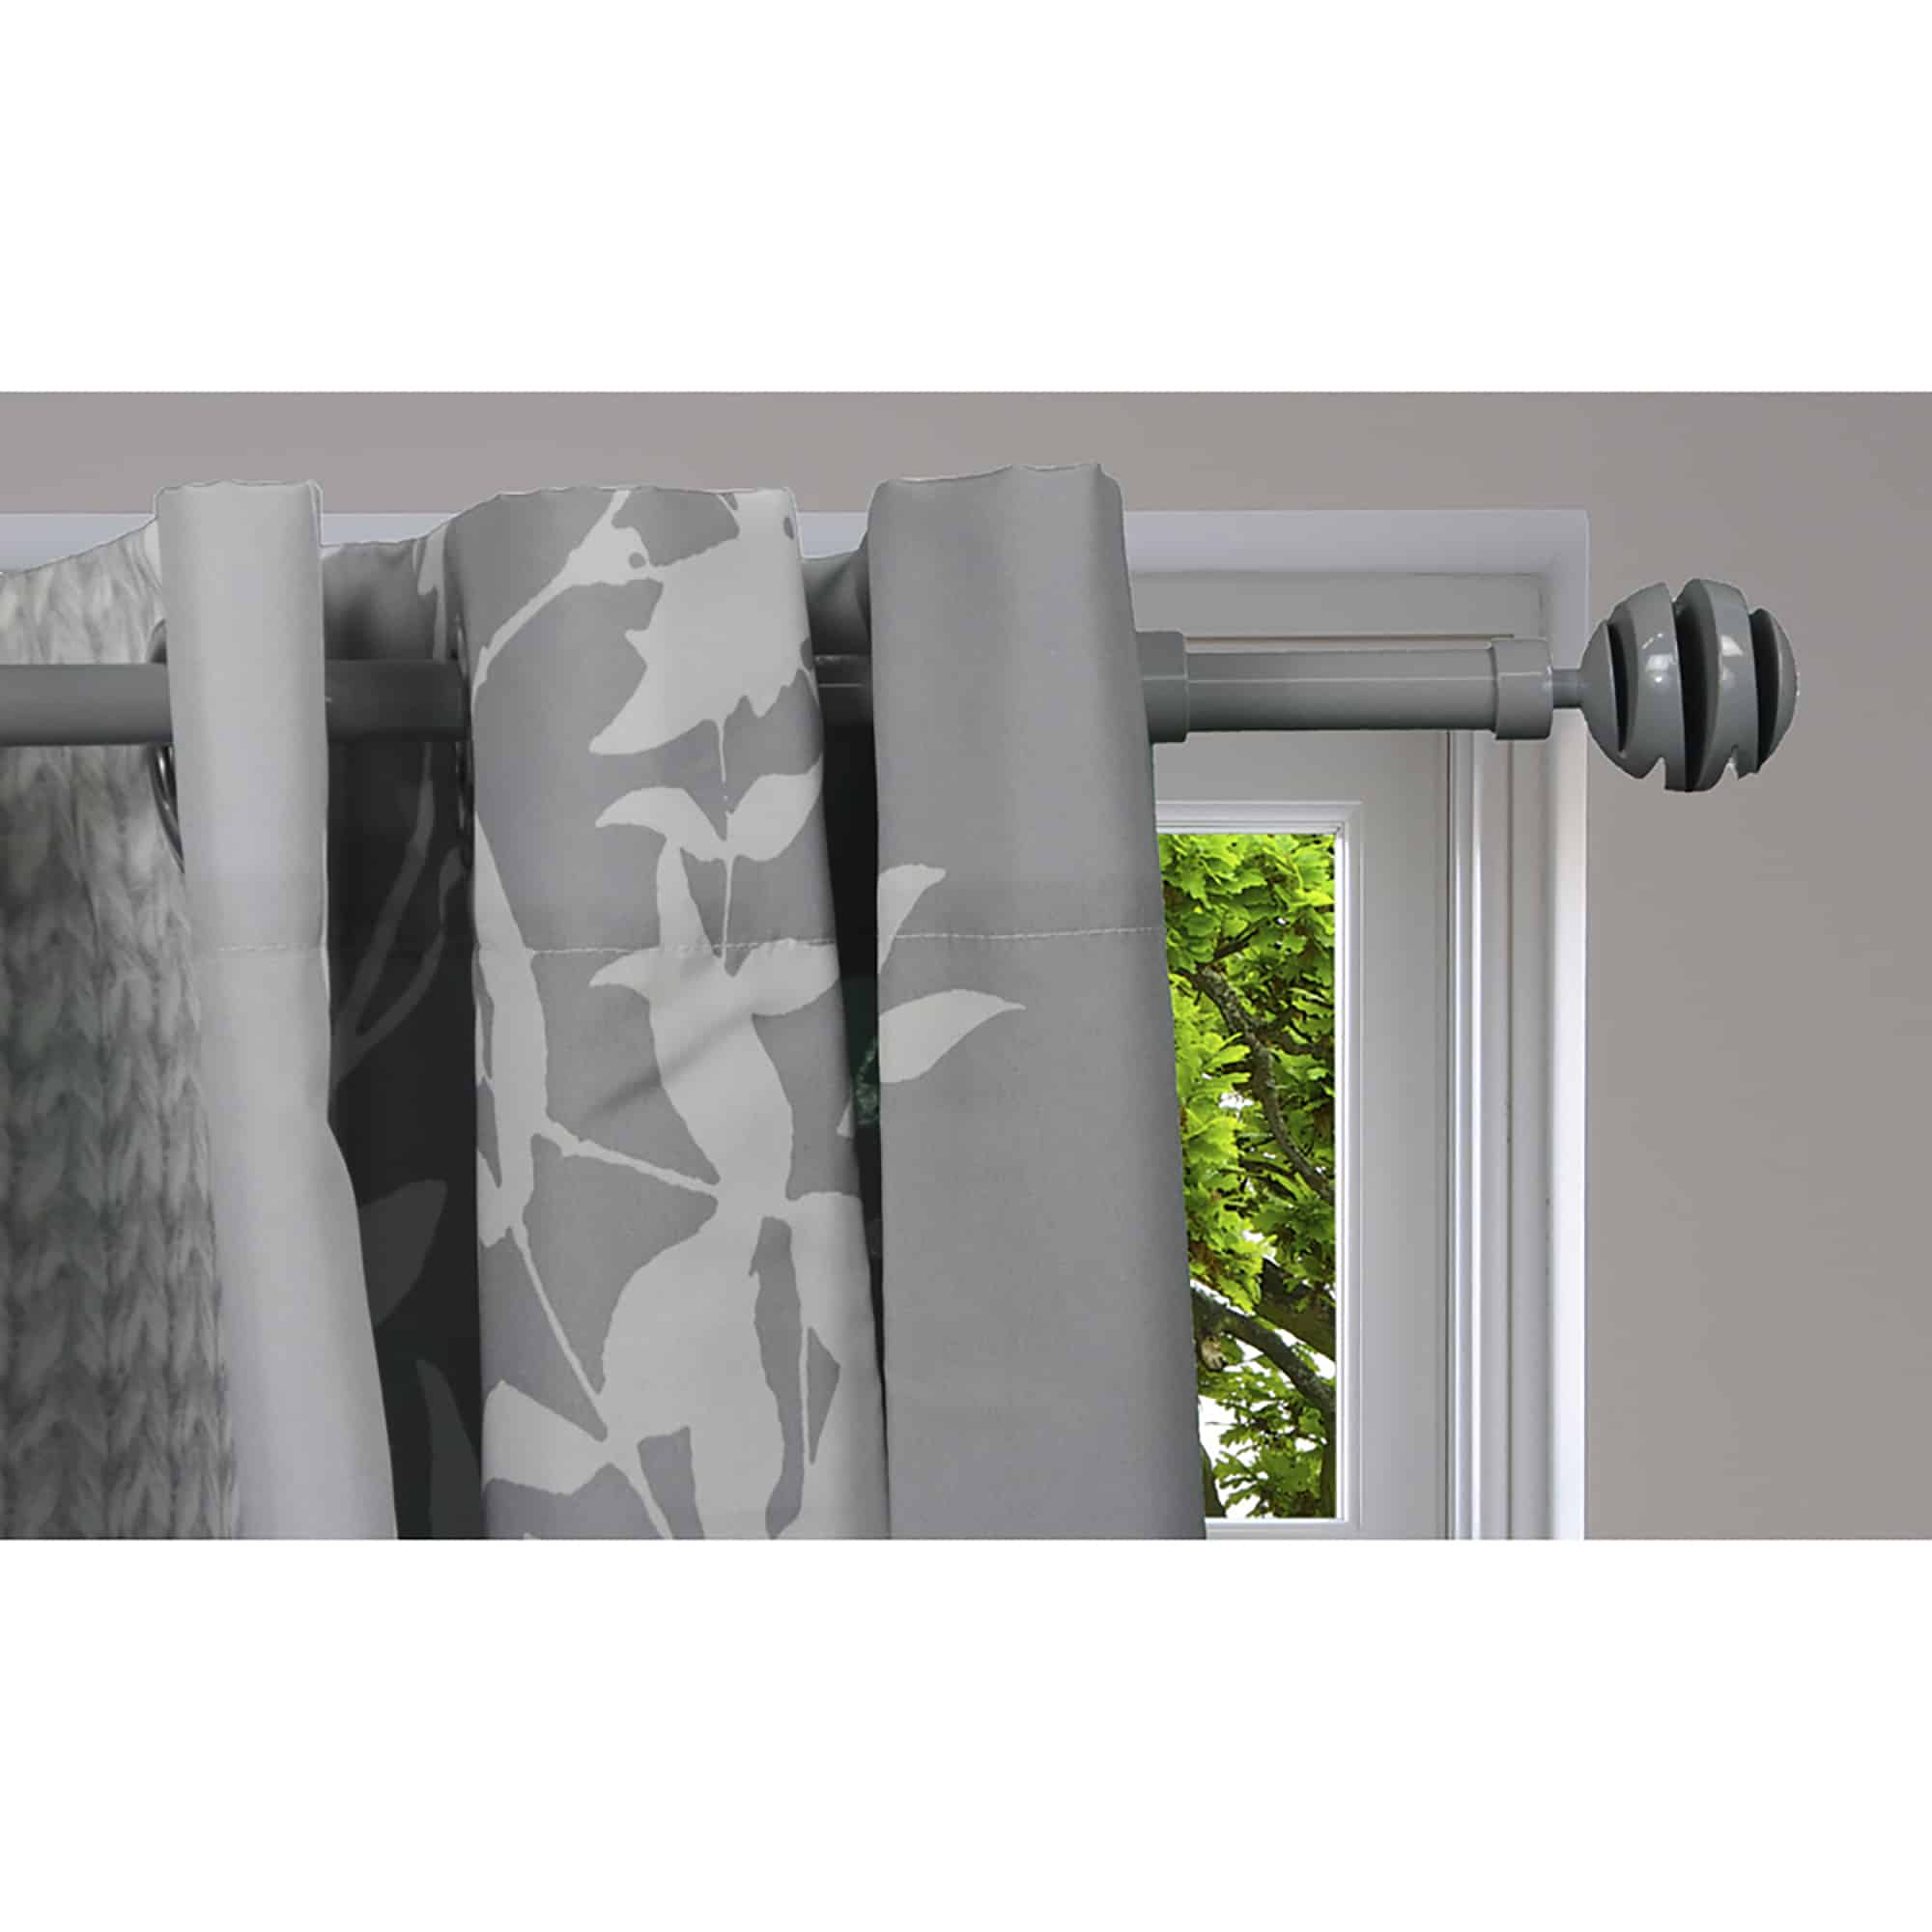 Adjustable 3/4" Single Window Curtain Rod 50" to 82" Grey